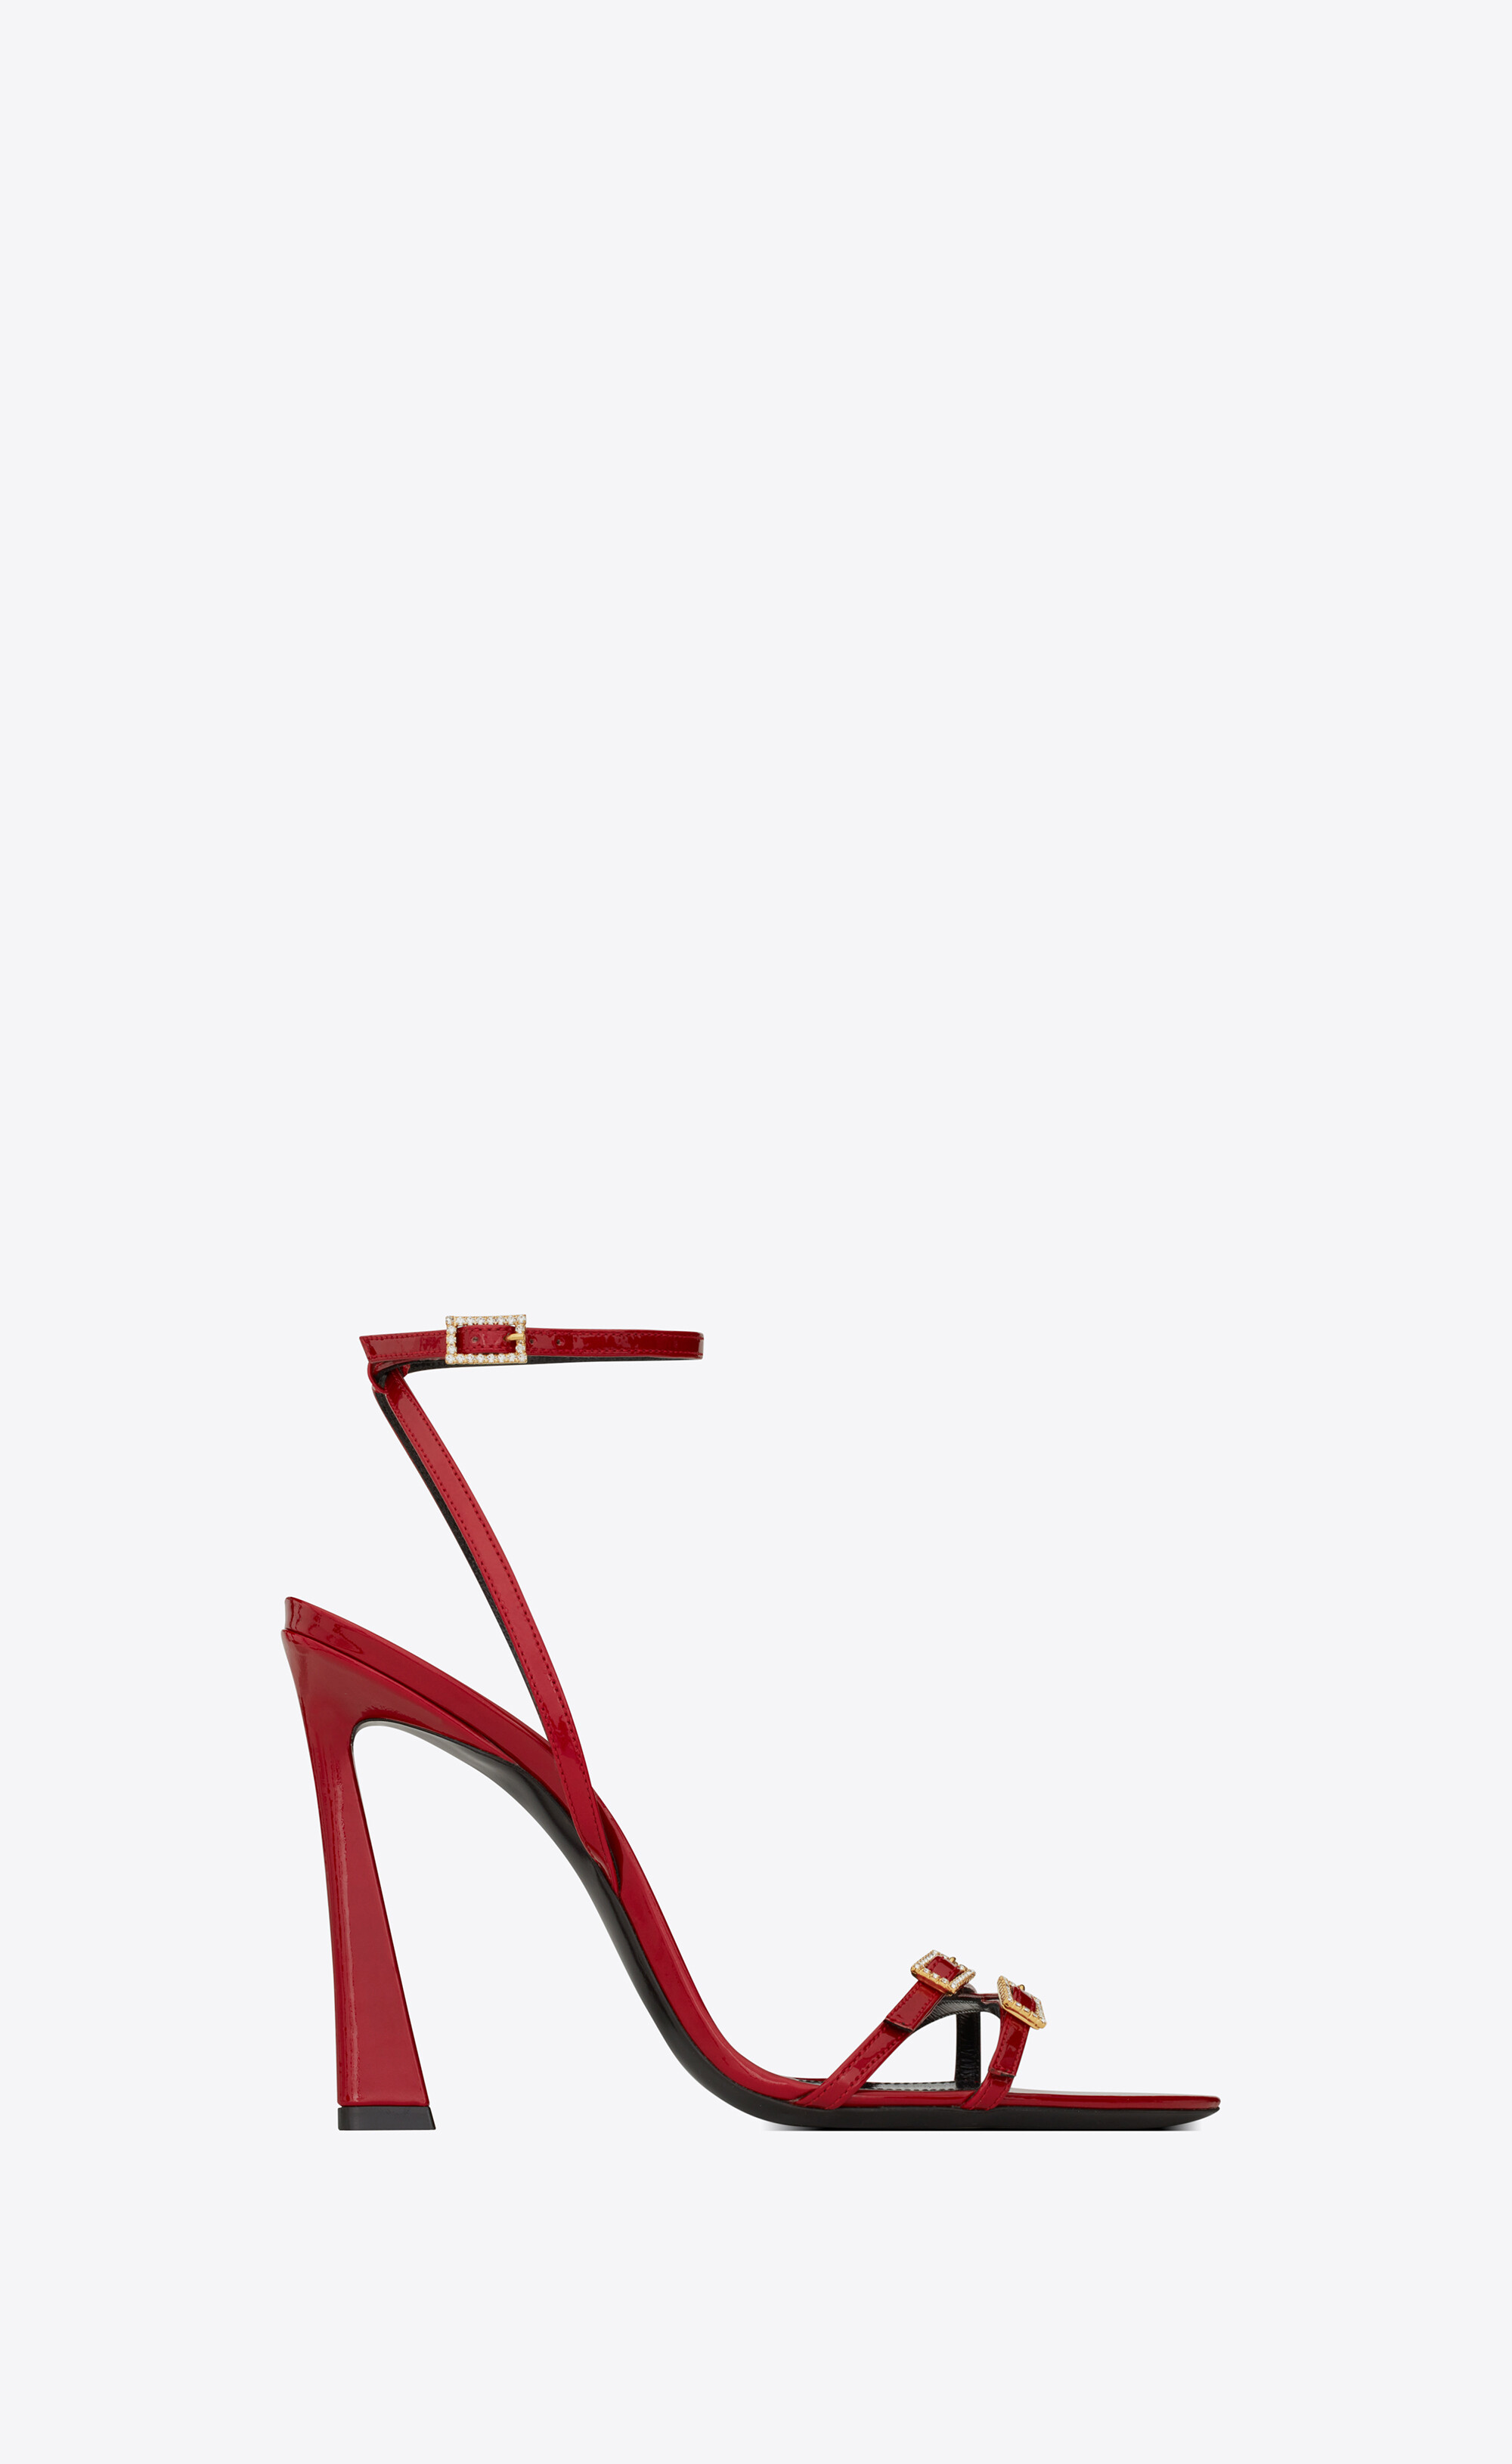 SAINT LAURENT on X: Carmen Kassovitz wearing Saint Laurent by Anthony  Vaccarello 2022 Cannes Film Festival #YSL #SaintLaurent #YvesSaintLaurent  #CarmenKassovitz #CannesFilmFestival2022  / X